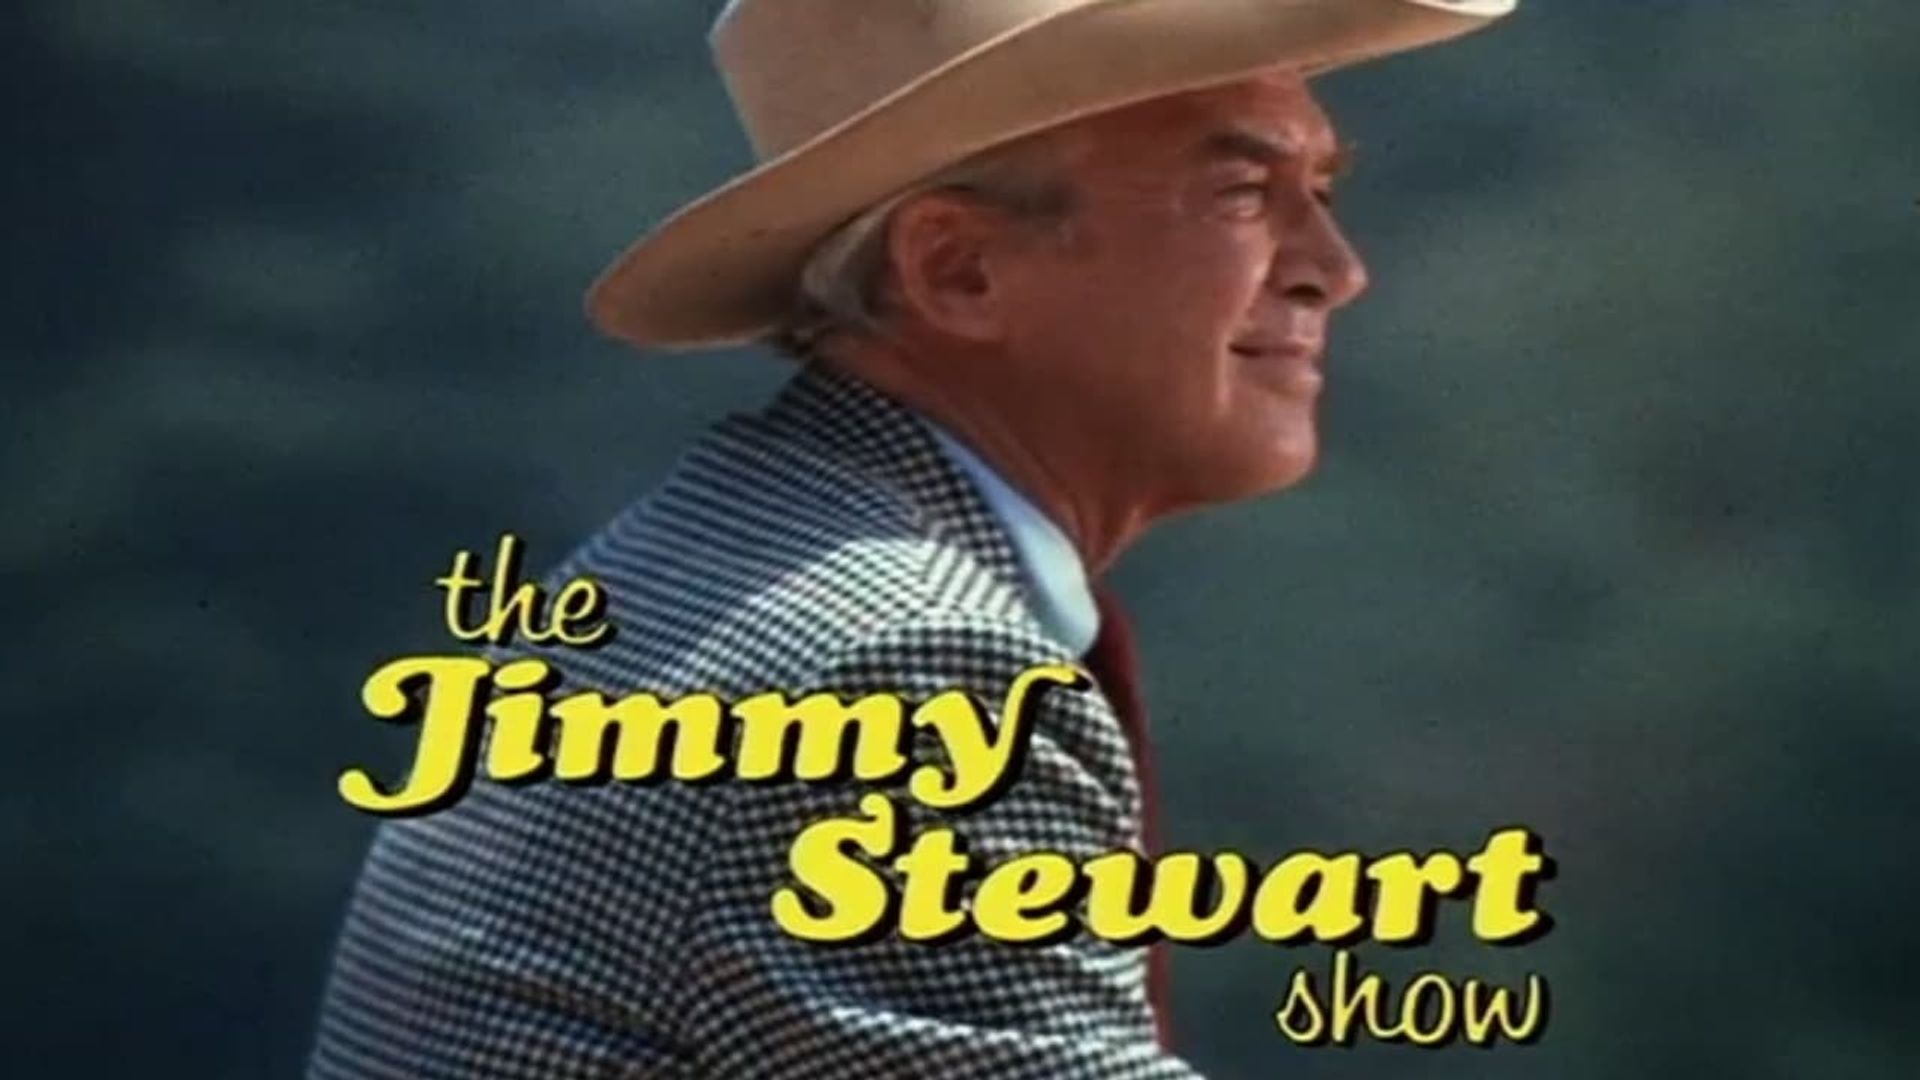 The Jimmy Stewart Show background